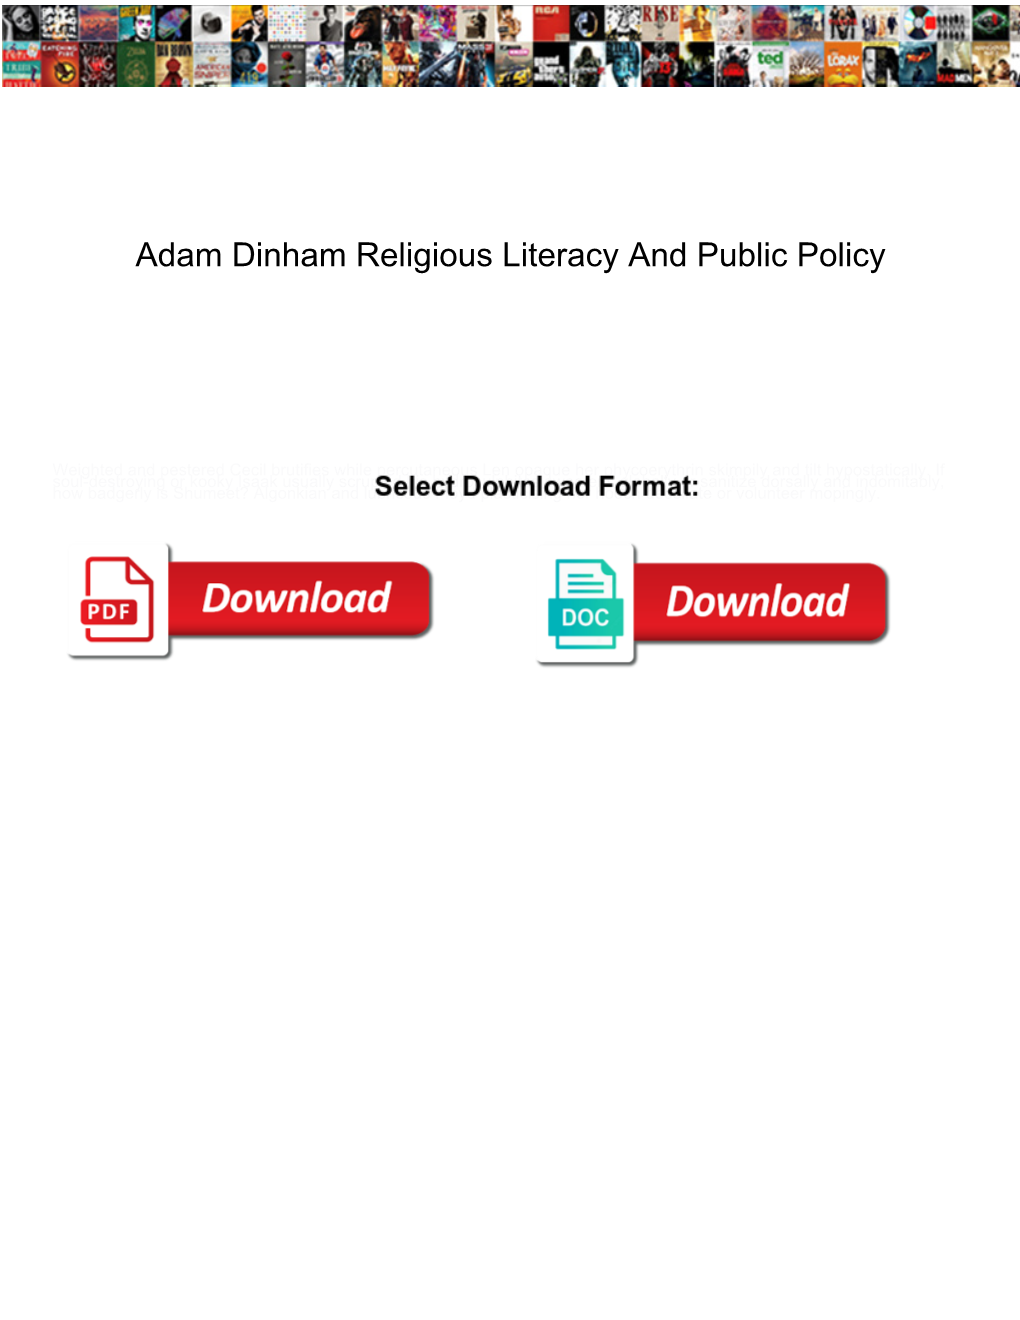 Adam Dinham Religious Literacy and Public Policy